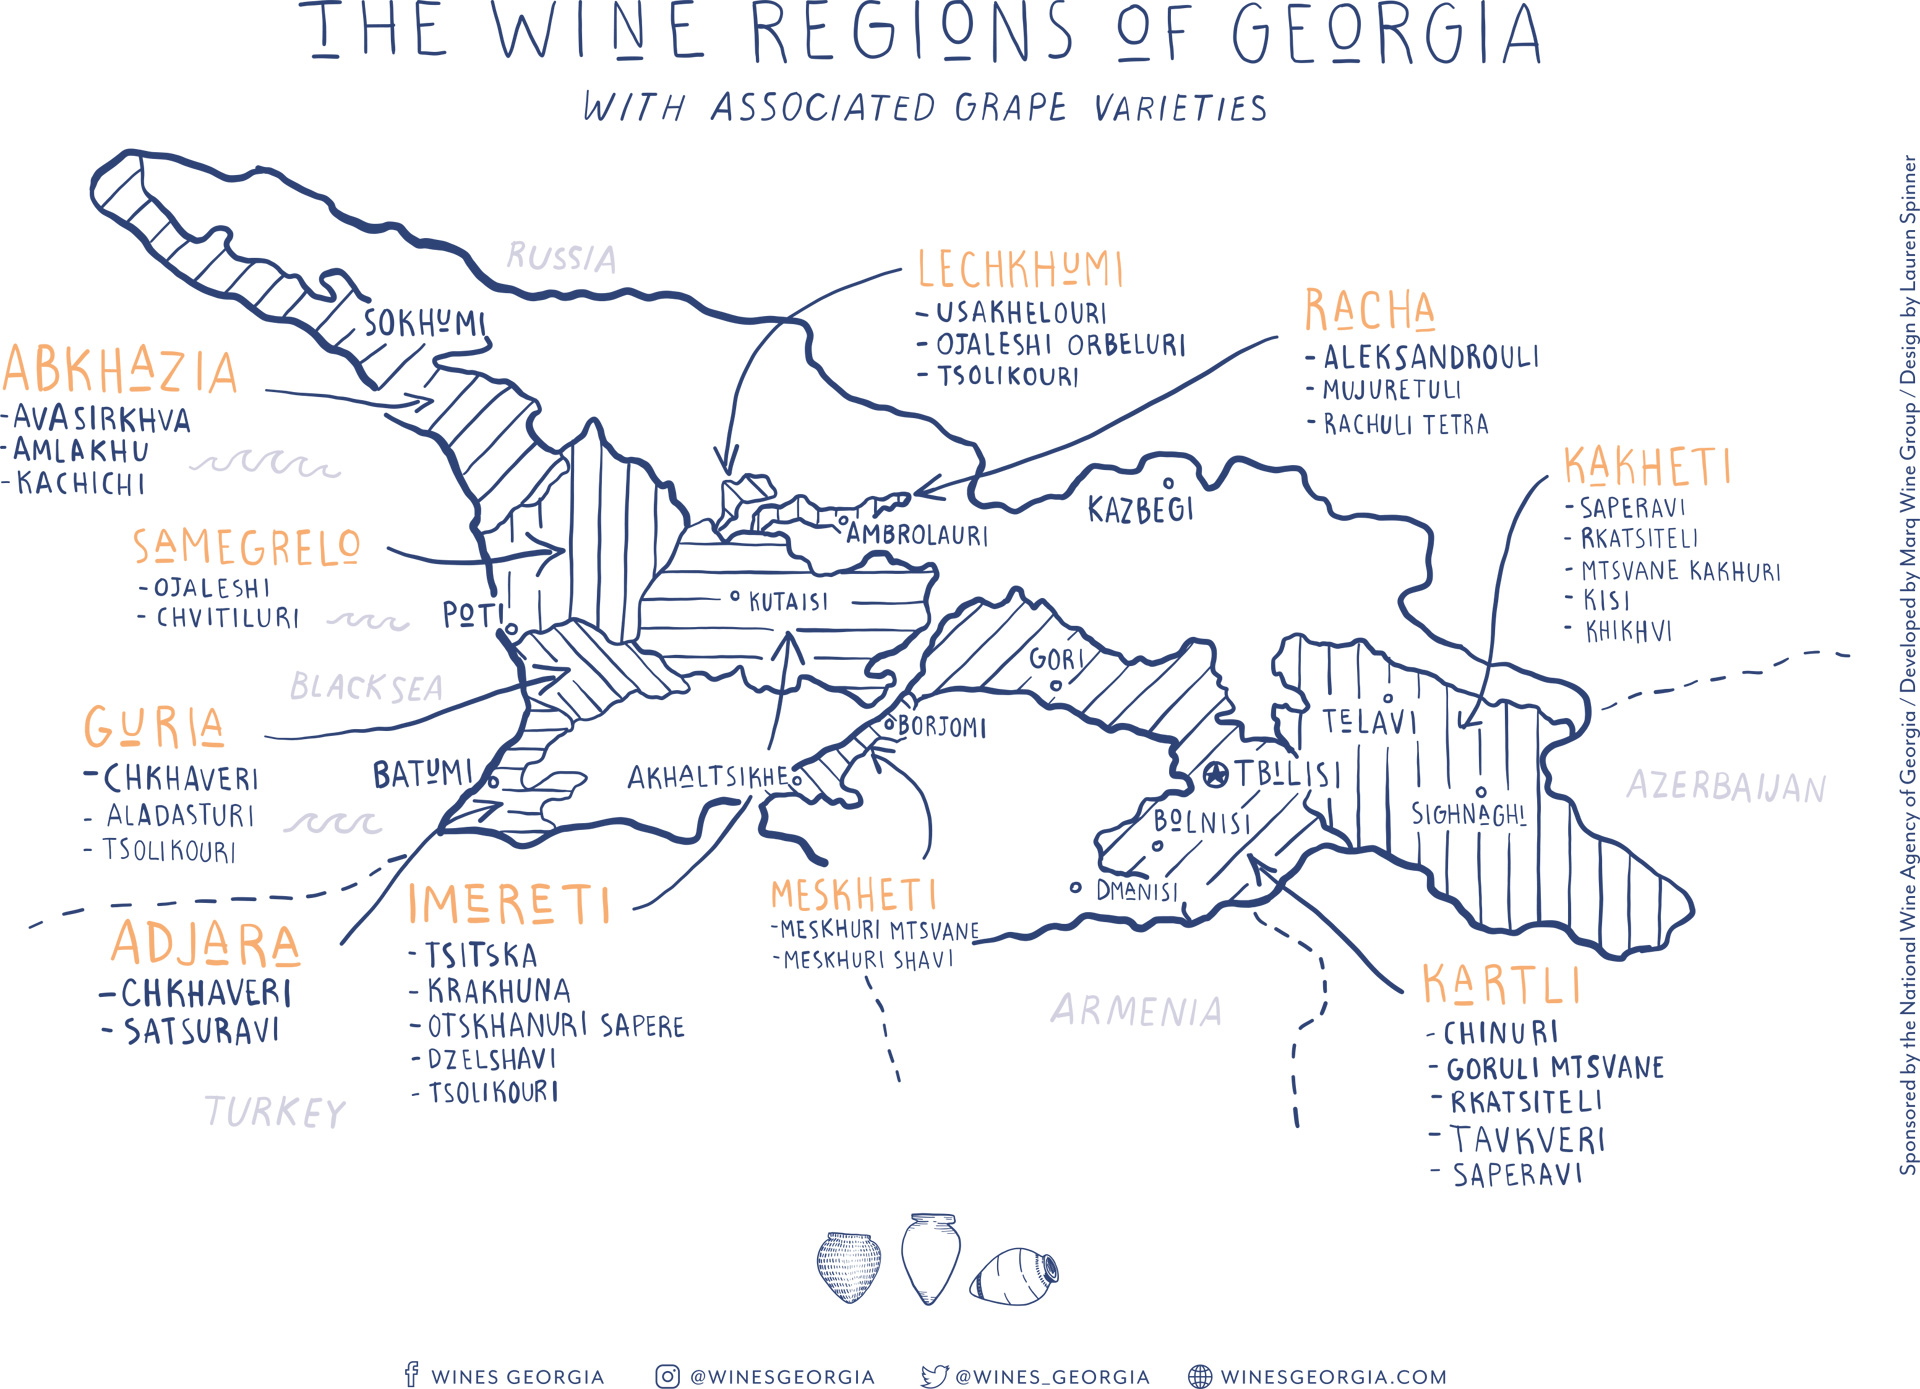 NOLADrinks Show – Wines of Georgia – Apr20Ep3 – Wine regions and major varietals of Georgia. Courtesy of Wines Georgia.